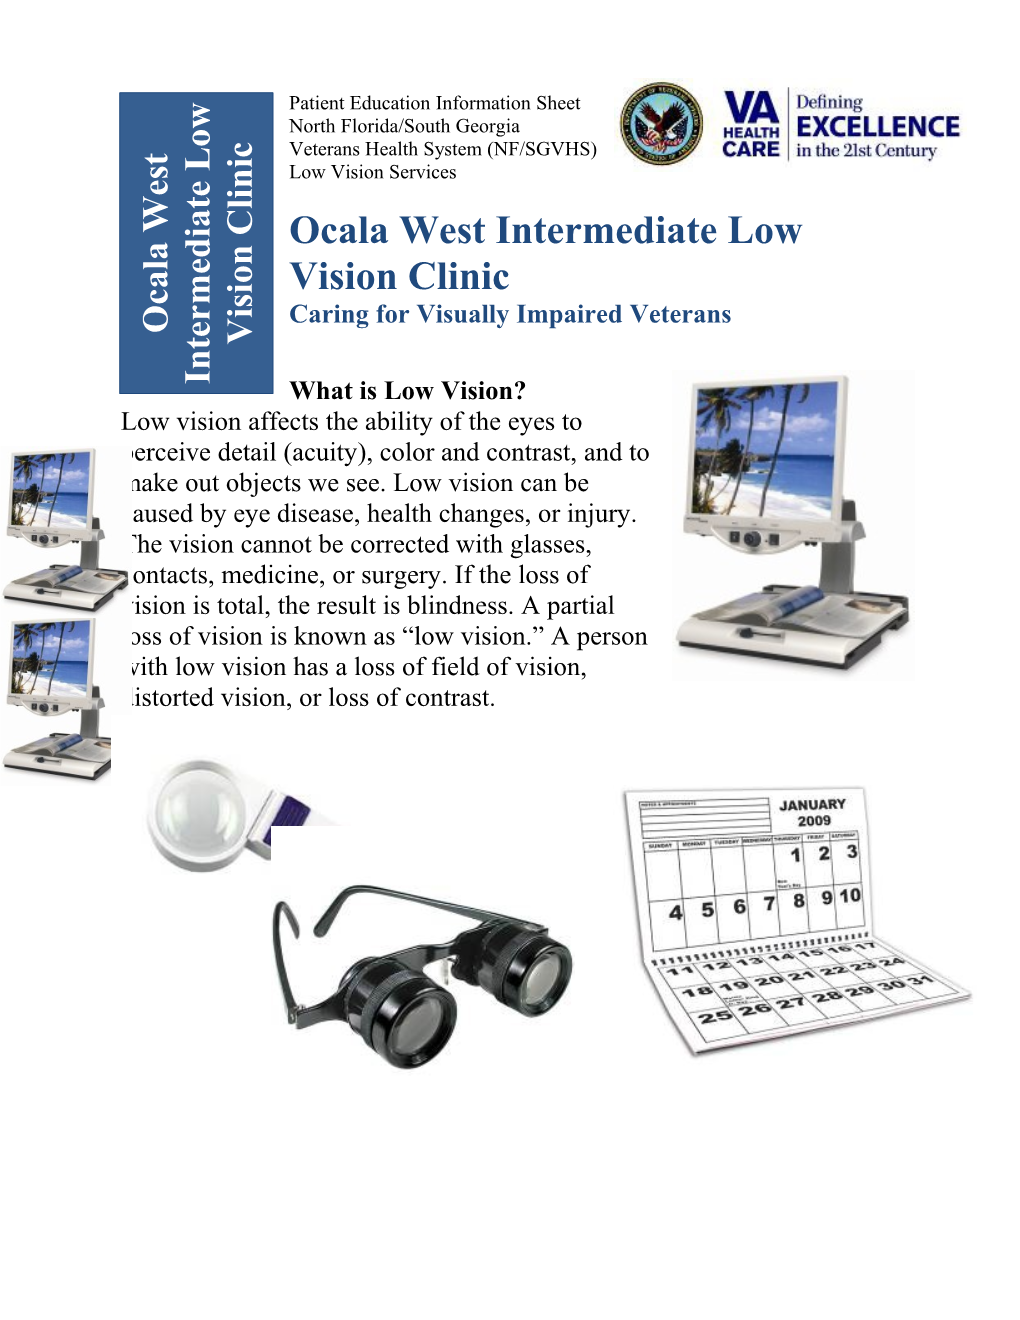 Ocala West Intermediate Low Vision Clinic